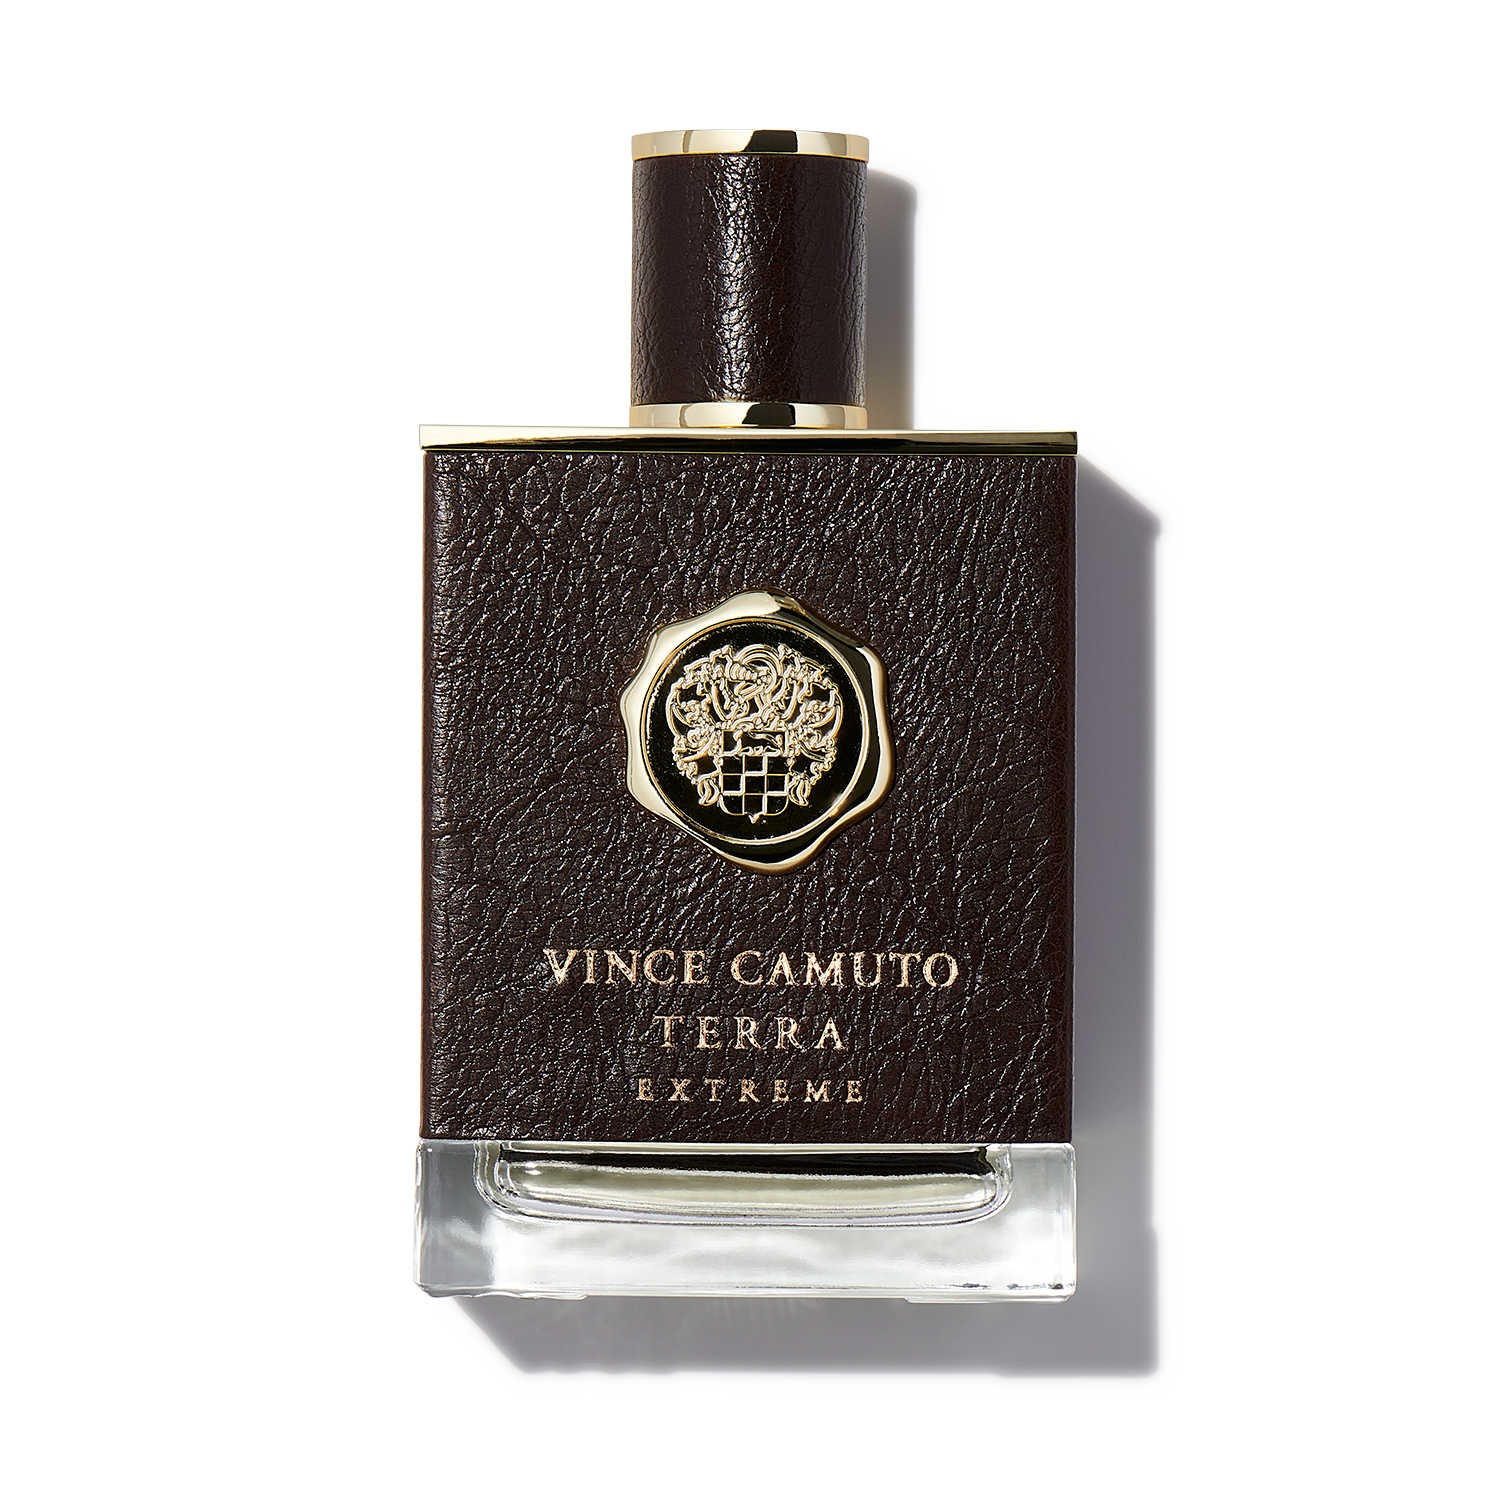 Vince Camuto Terra Extreme 3 Pc Set, 3.4 oz. EDP + deodorant and shampoo